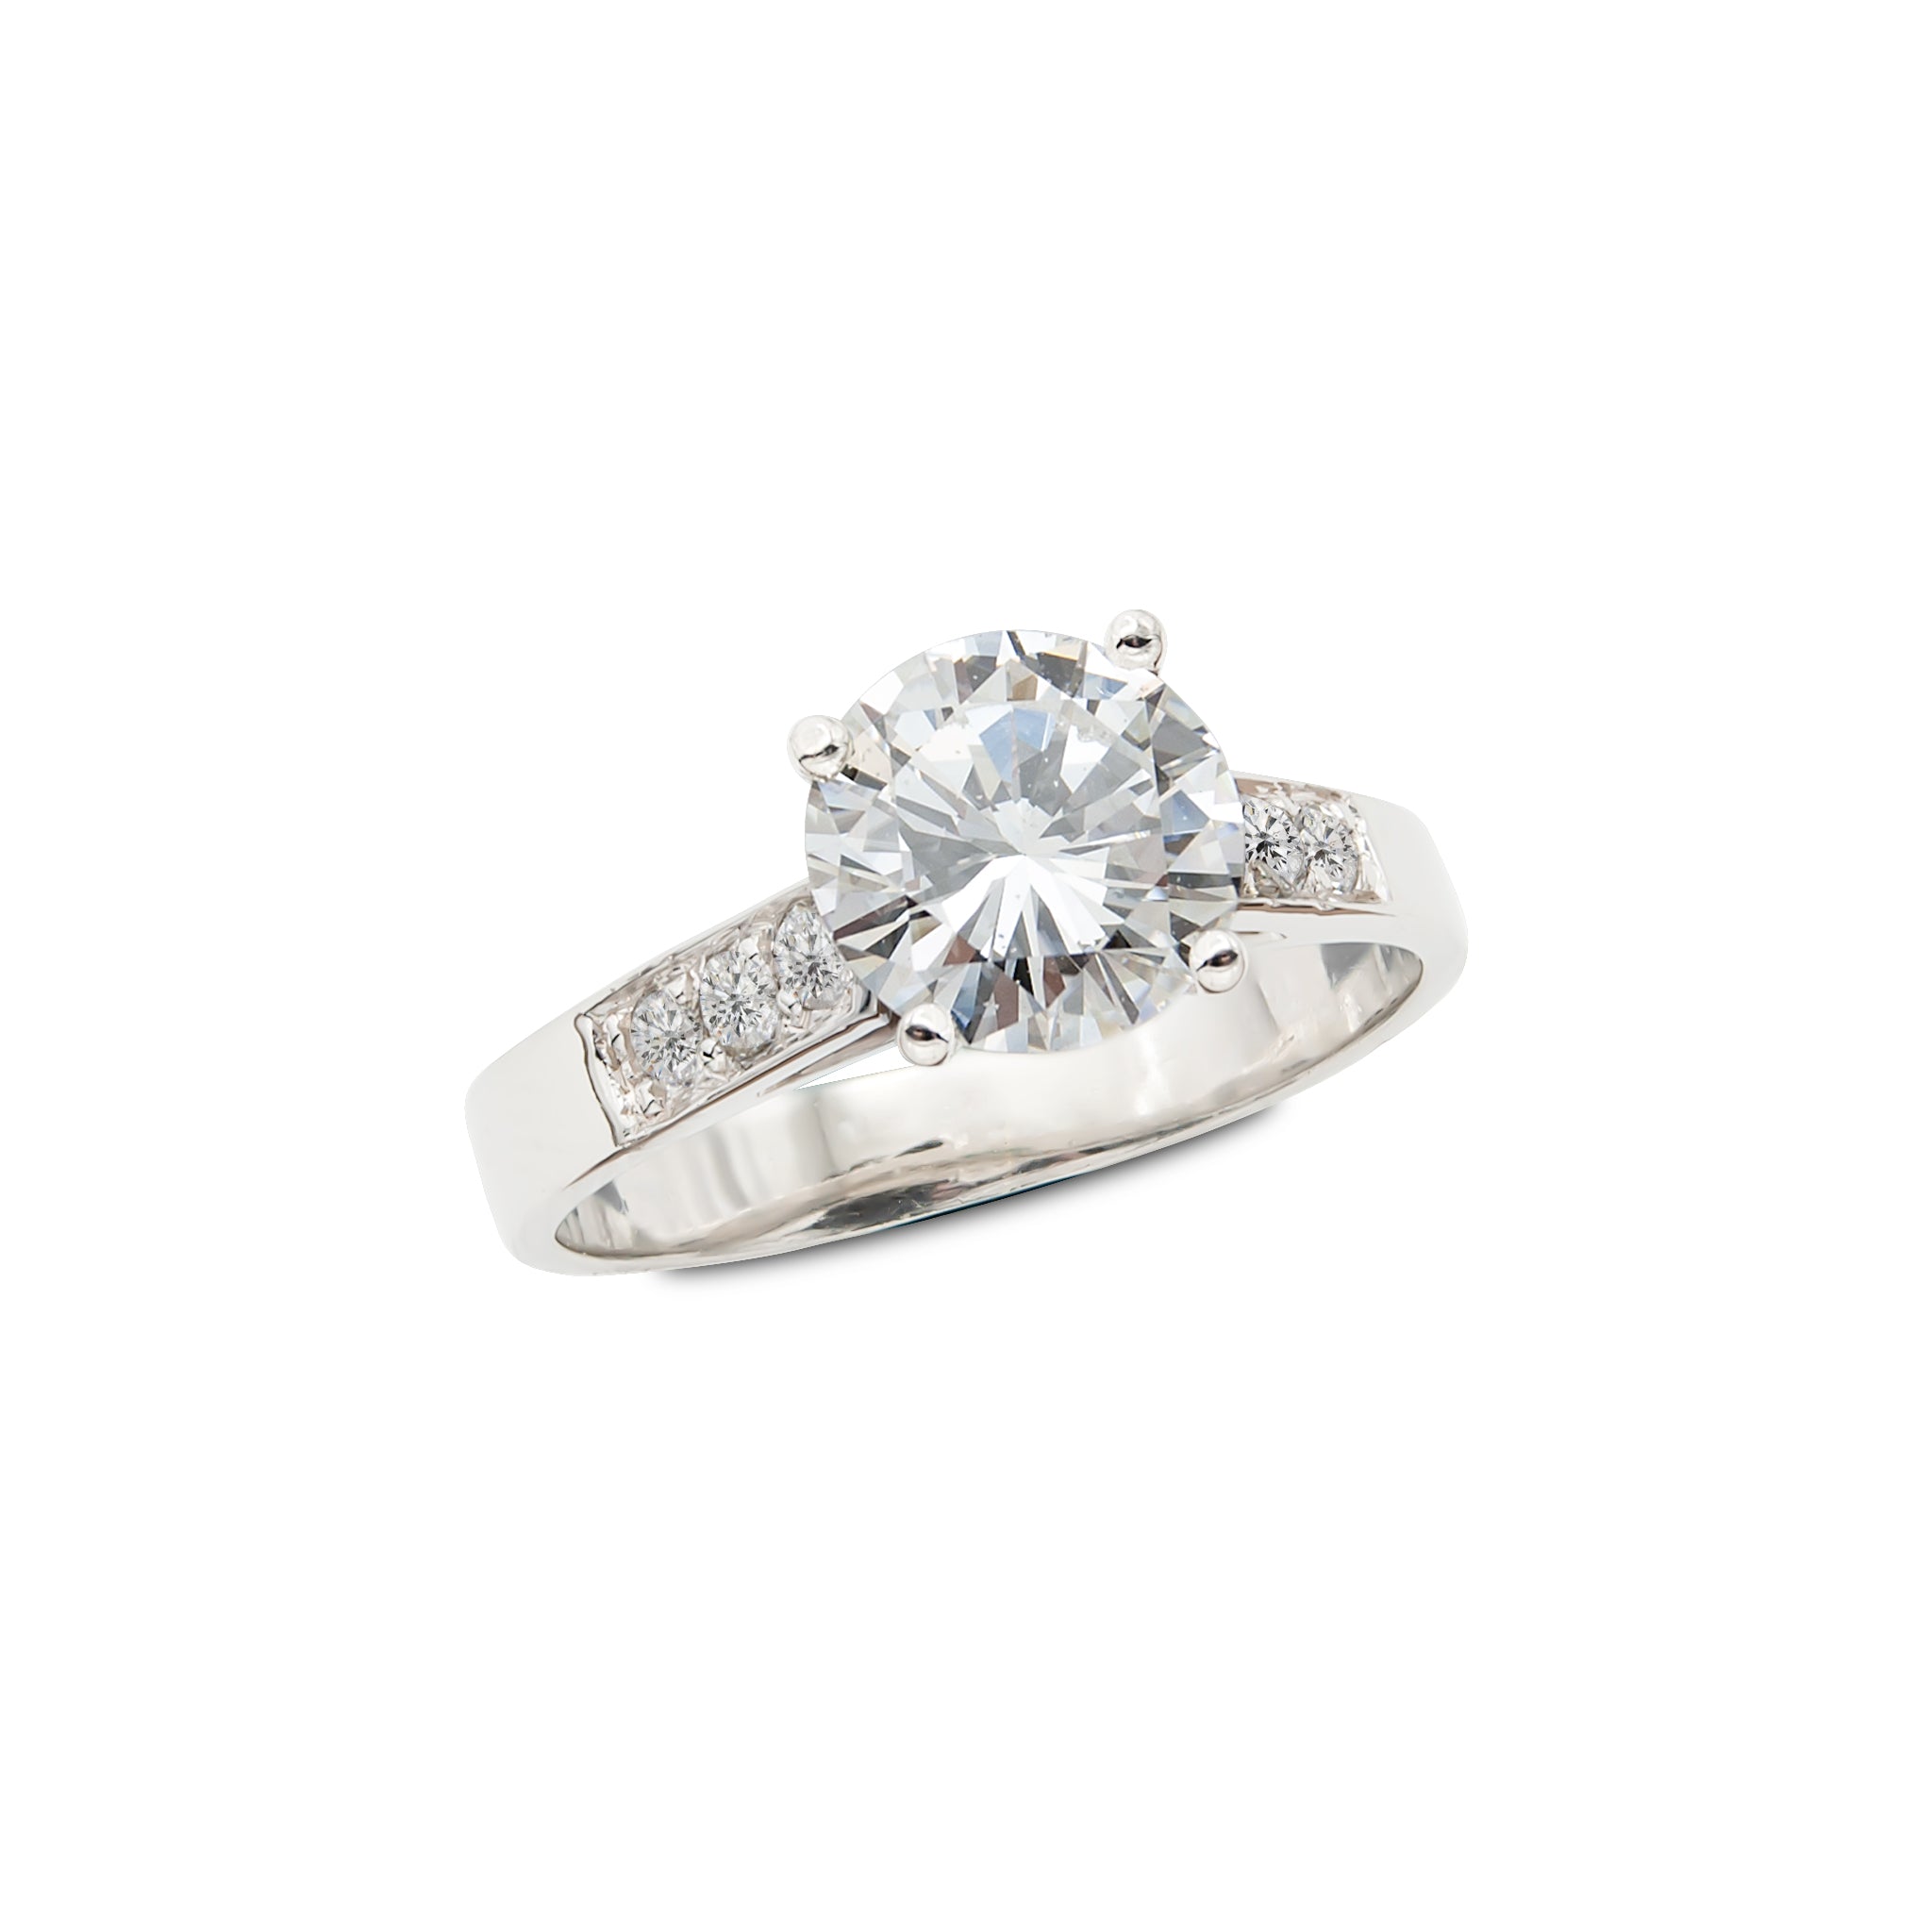 Buy 1.95 Carat Hidden Halo Round Diamond Ring Engagement Ring 14 Karat Gold  Online in India - Etsy